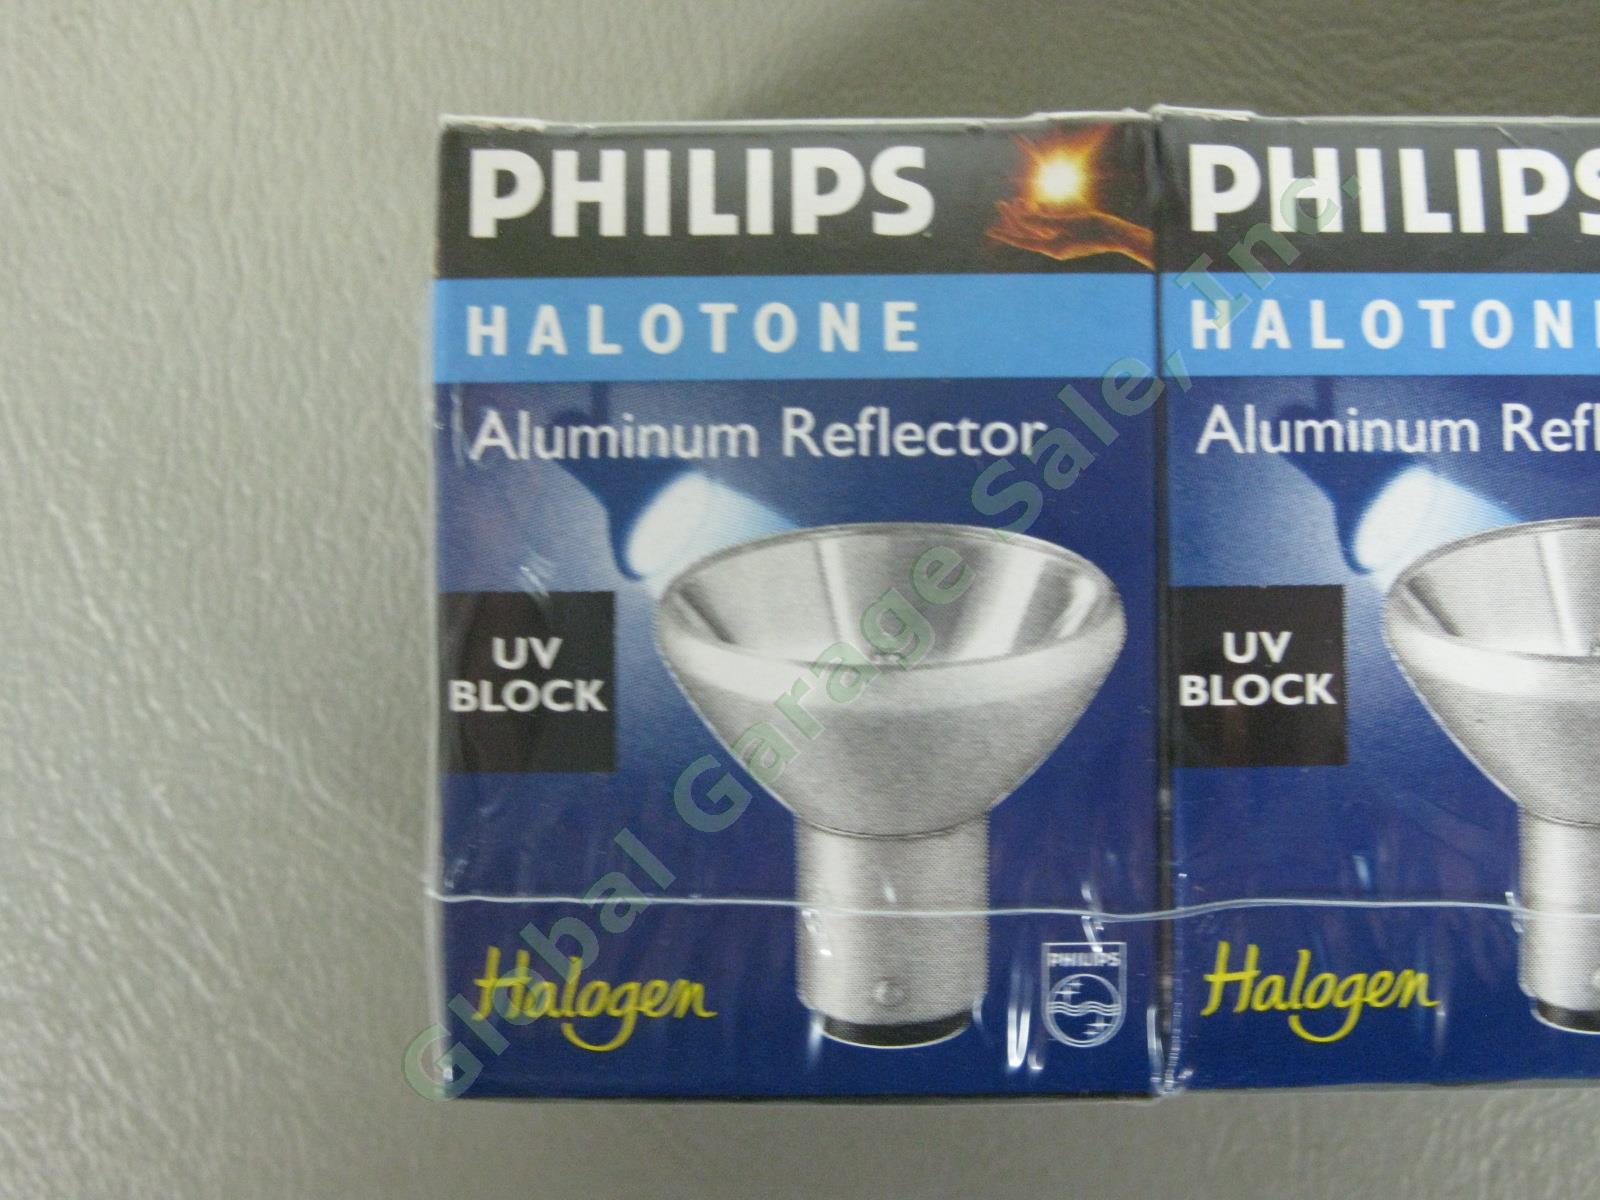 50 NEW Philips Halotone Light Bulb Lot 20w 12v UV Block 6434/FR Frosted 18° NR 2